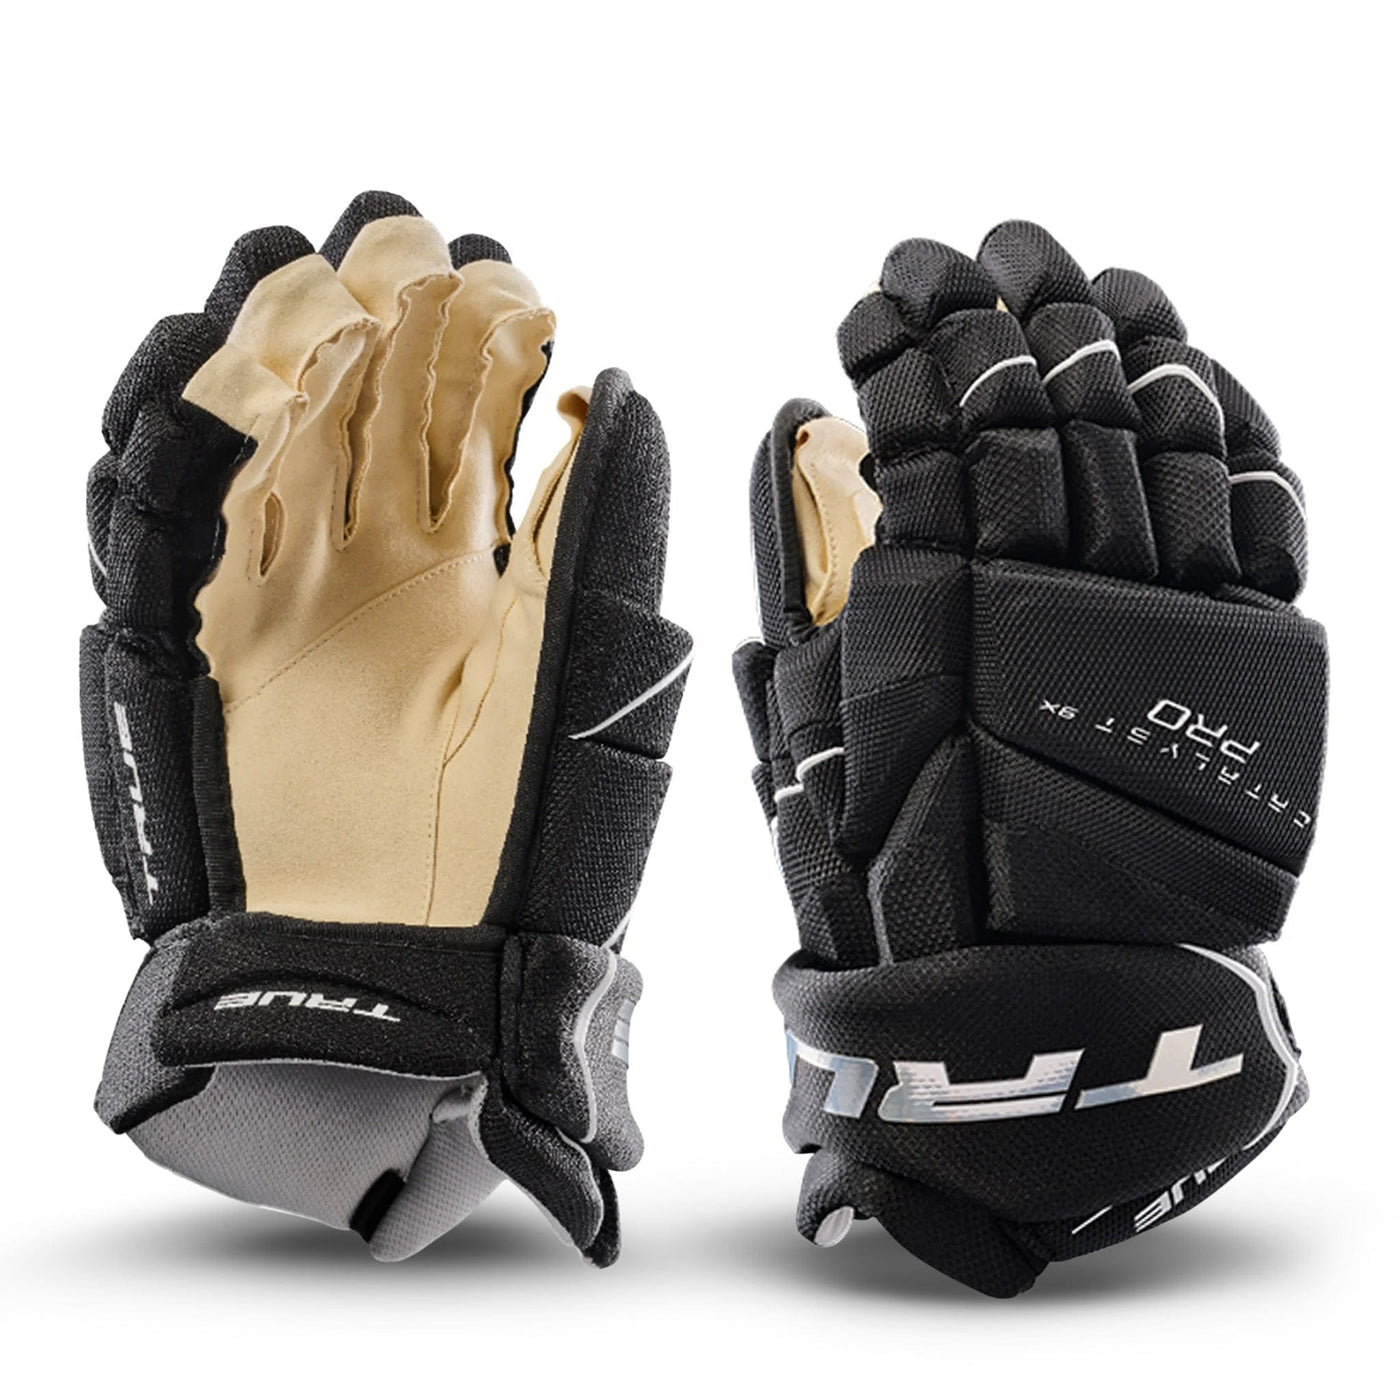 TRUE Catalyst 9X Pro Junior Hockey Gloves - The Hockey Shop Source For Sports